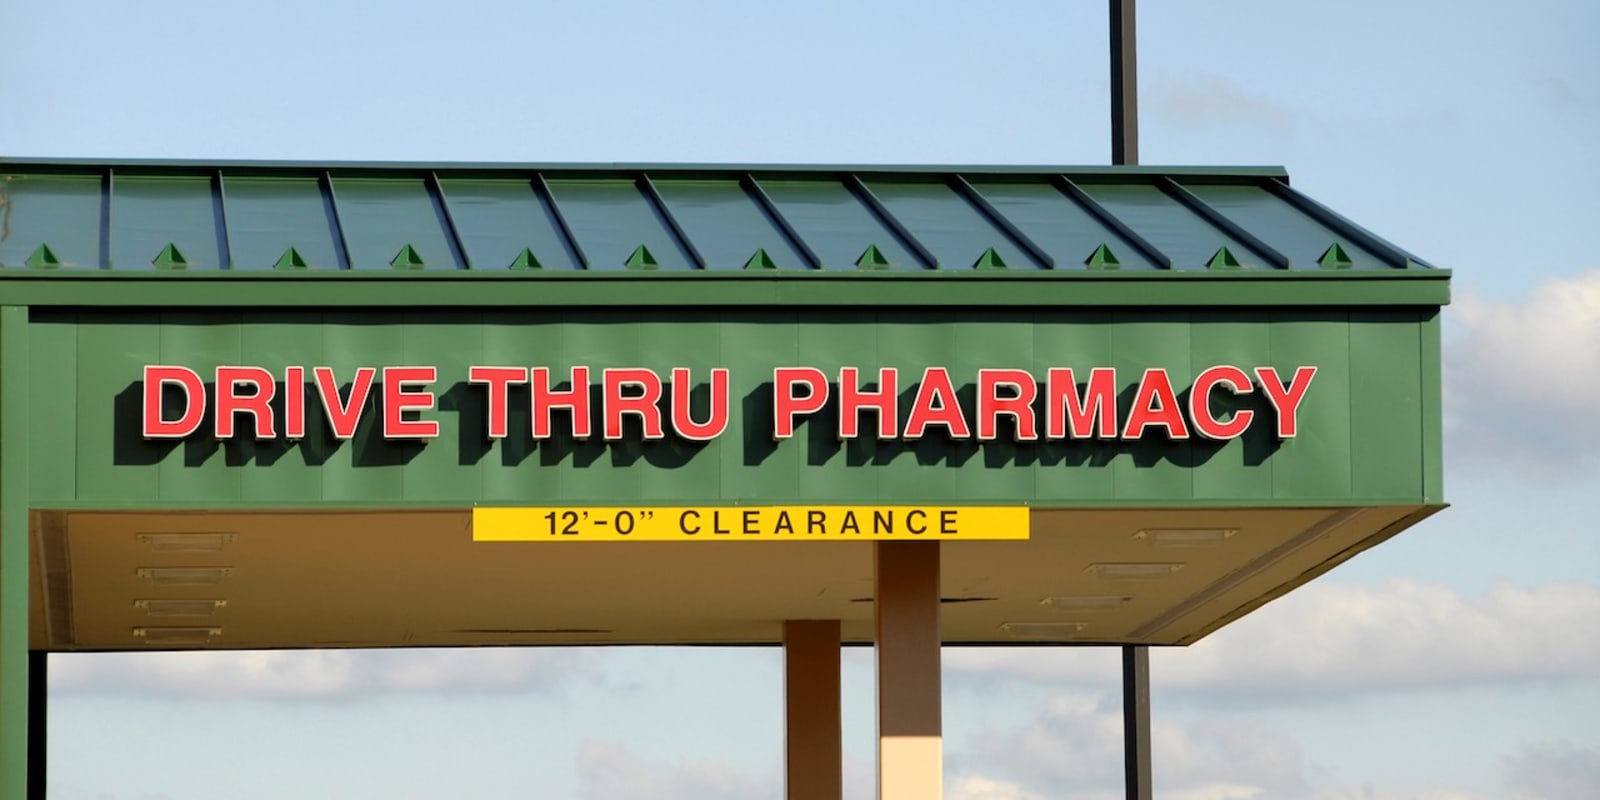 American Things - drive thru pharmacy - Drive Thru Pharmacy 12'0